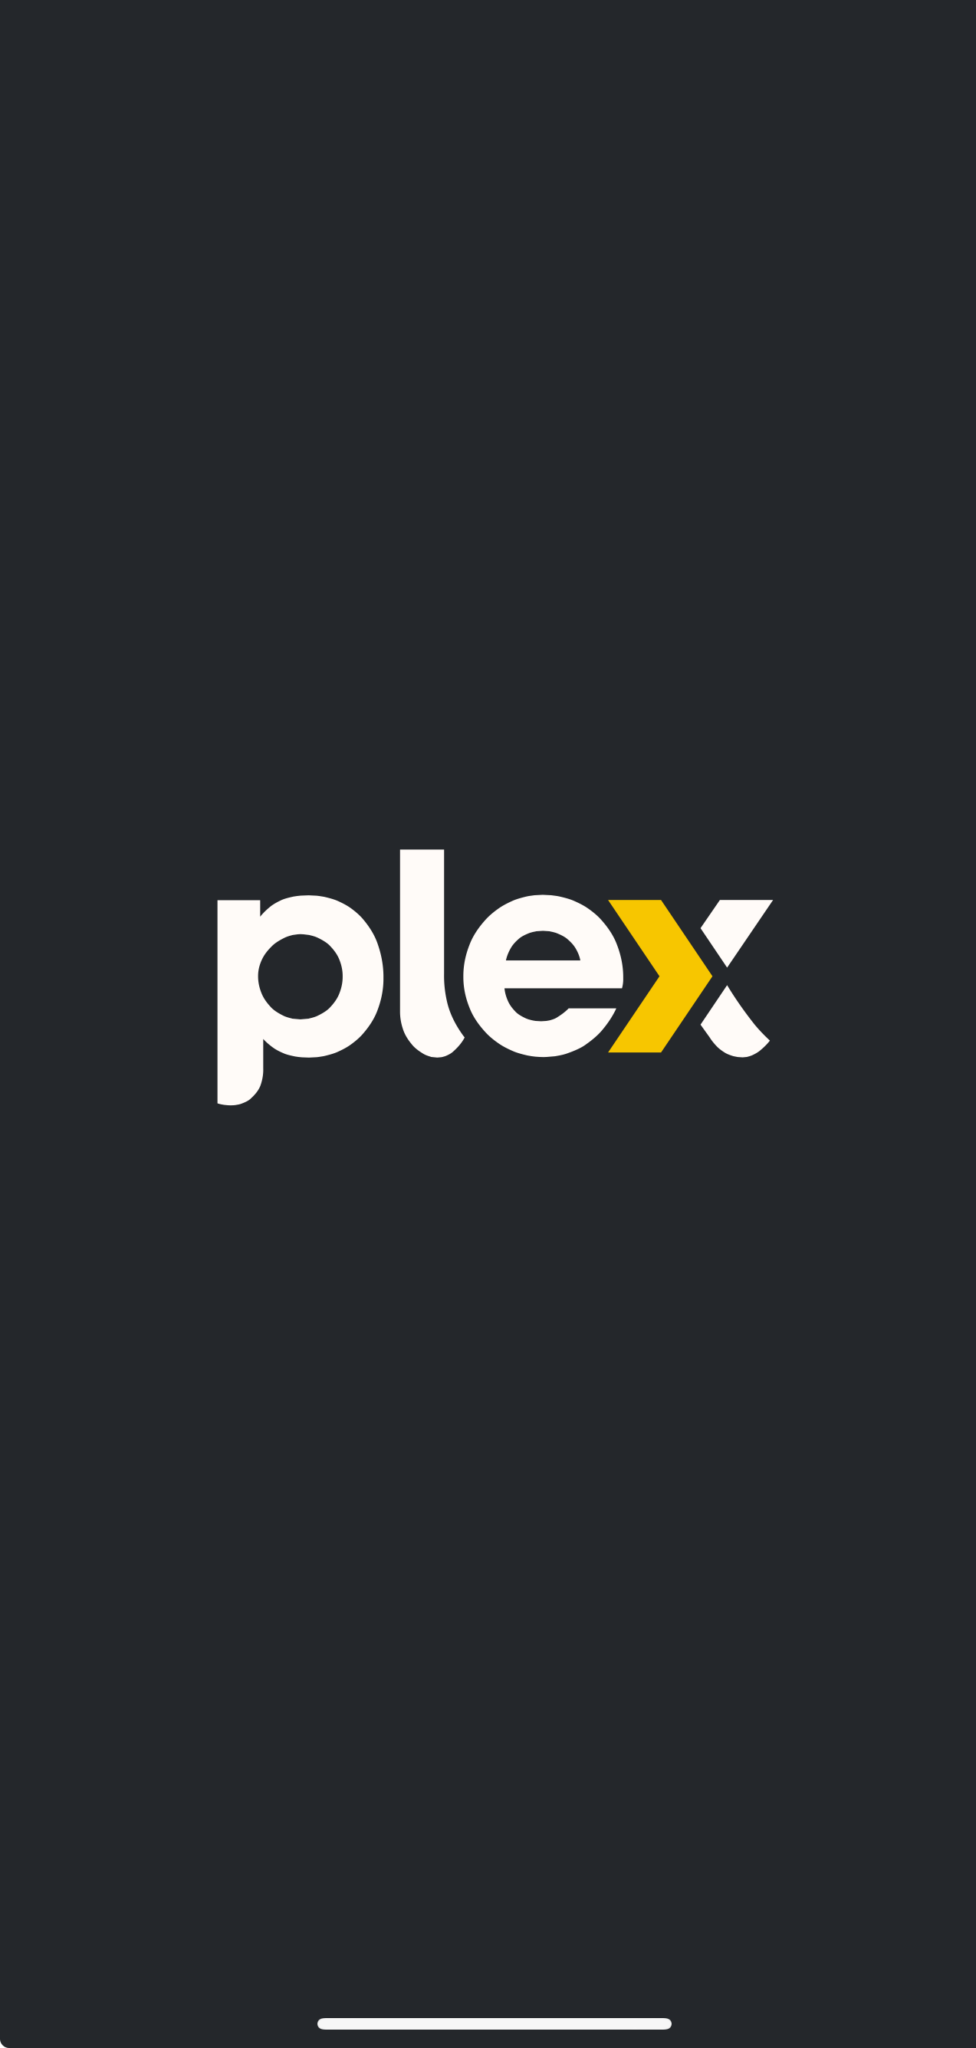 Plex,peliculas,series,estrenos,cine